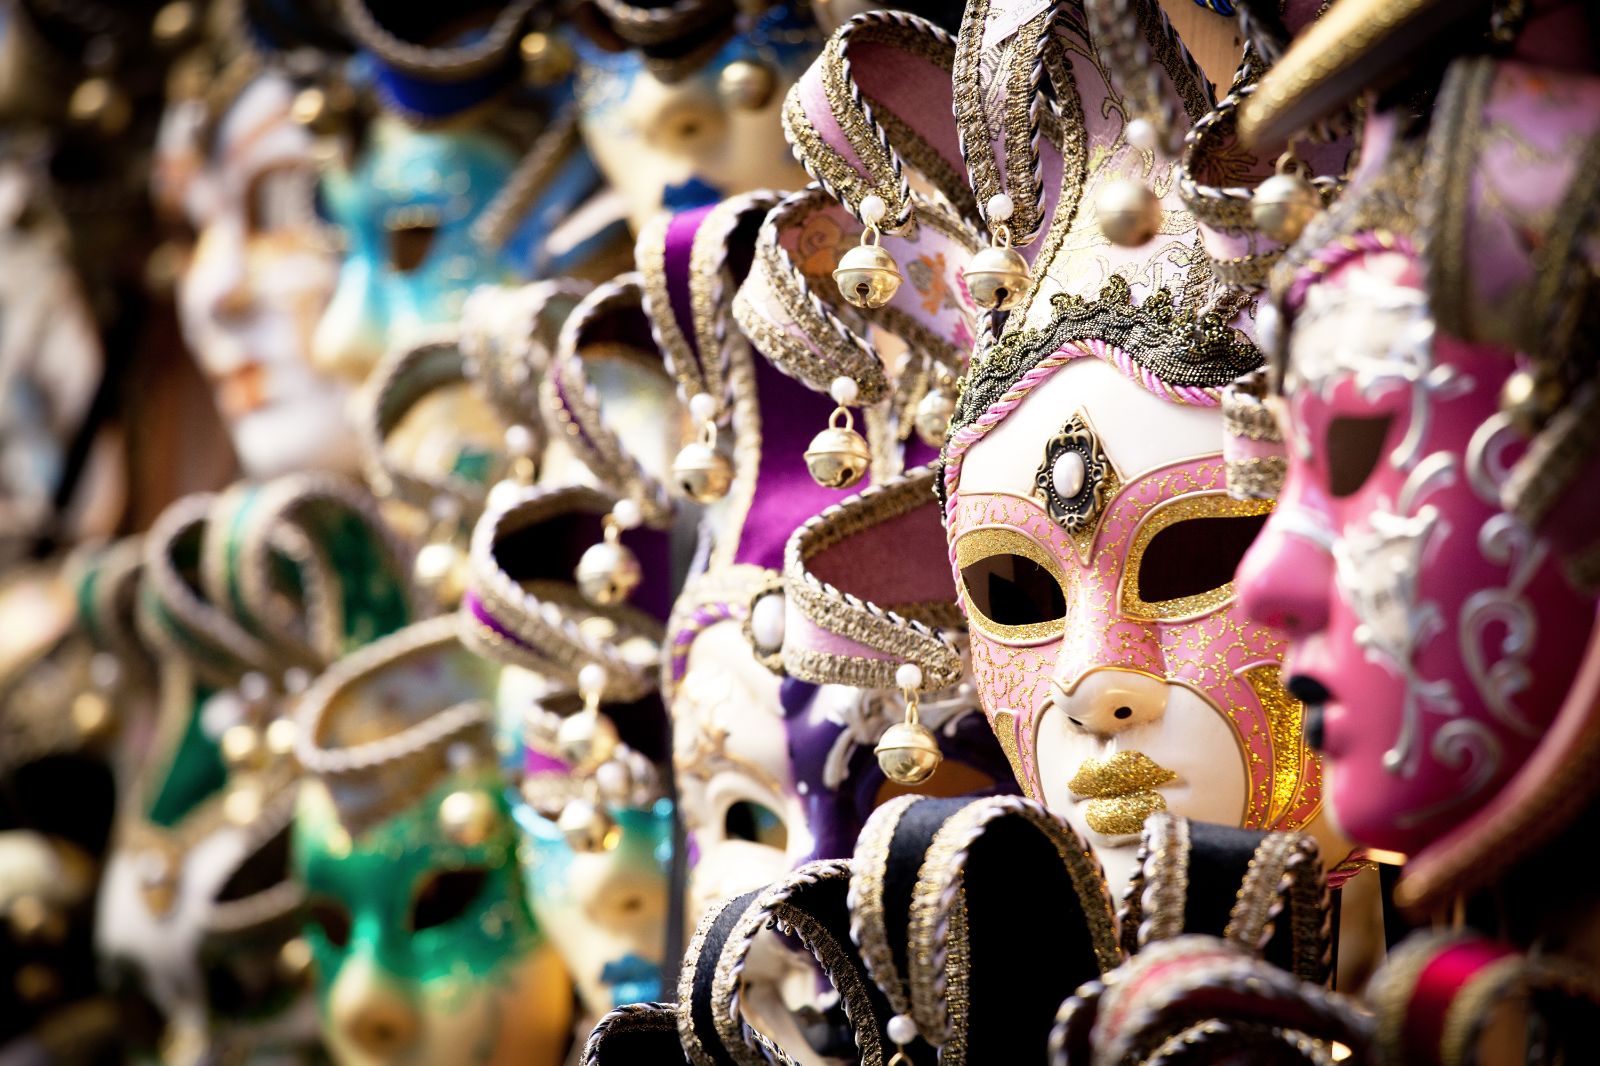 A row of handmade Venetian masks